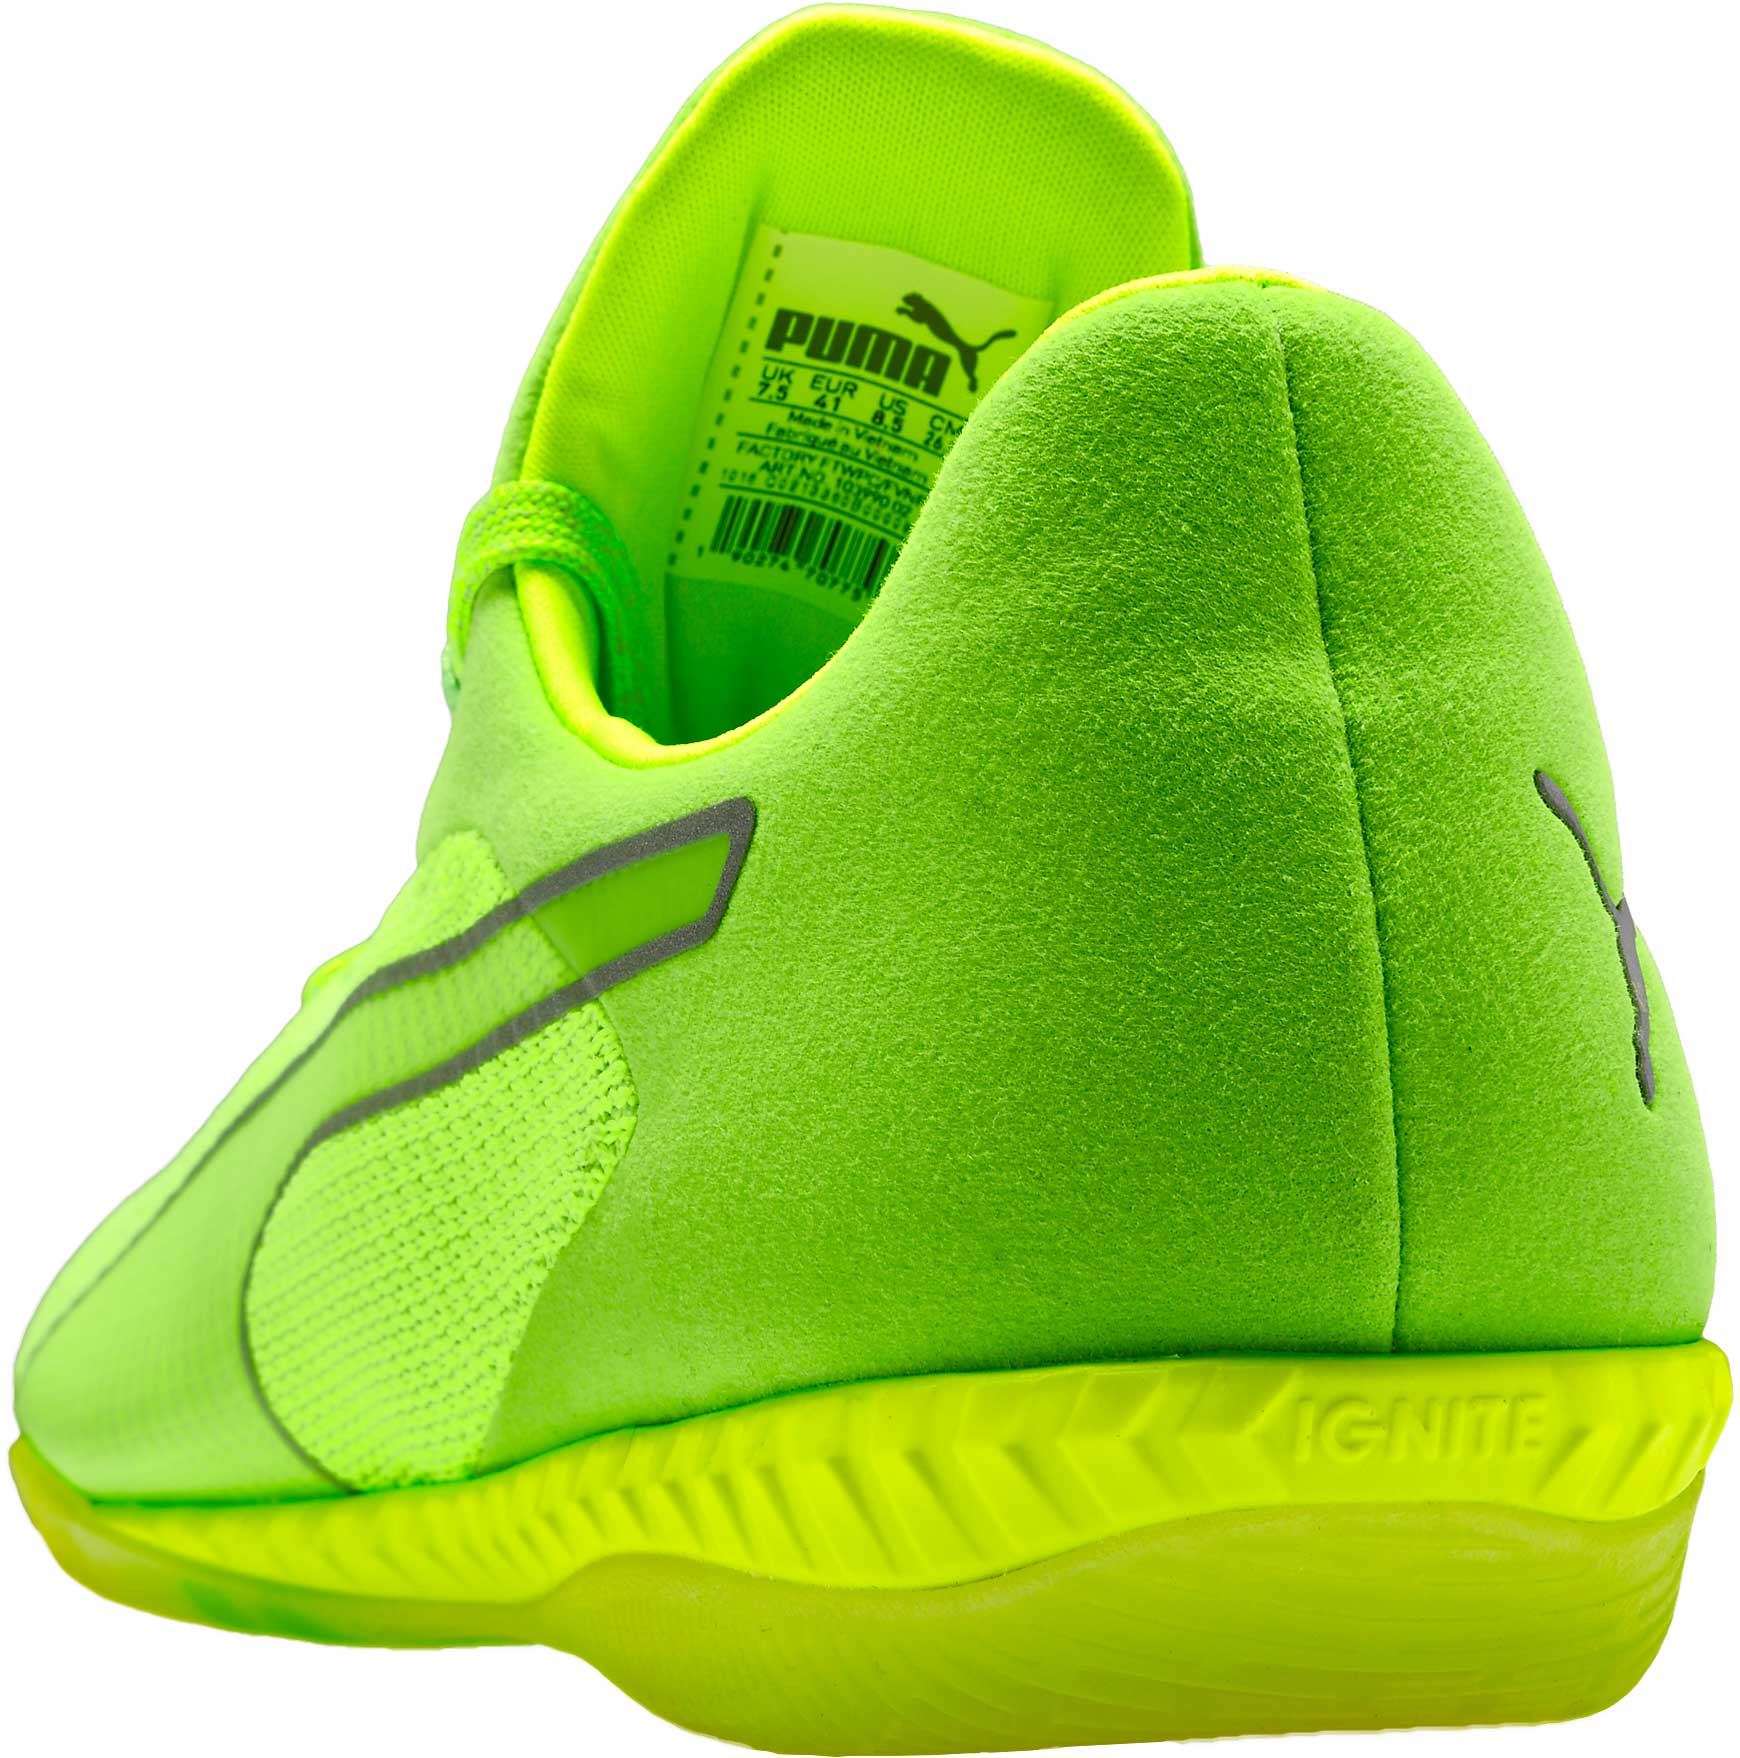 Armada Rápido Metro Puma 365 evoKNIT Ignite CT Soccer Shoes - Green Gecko & White - Soccer  Master